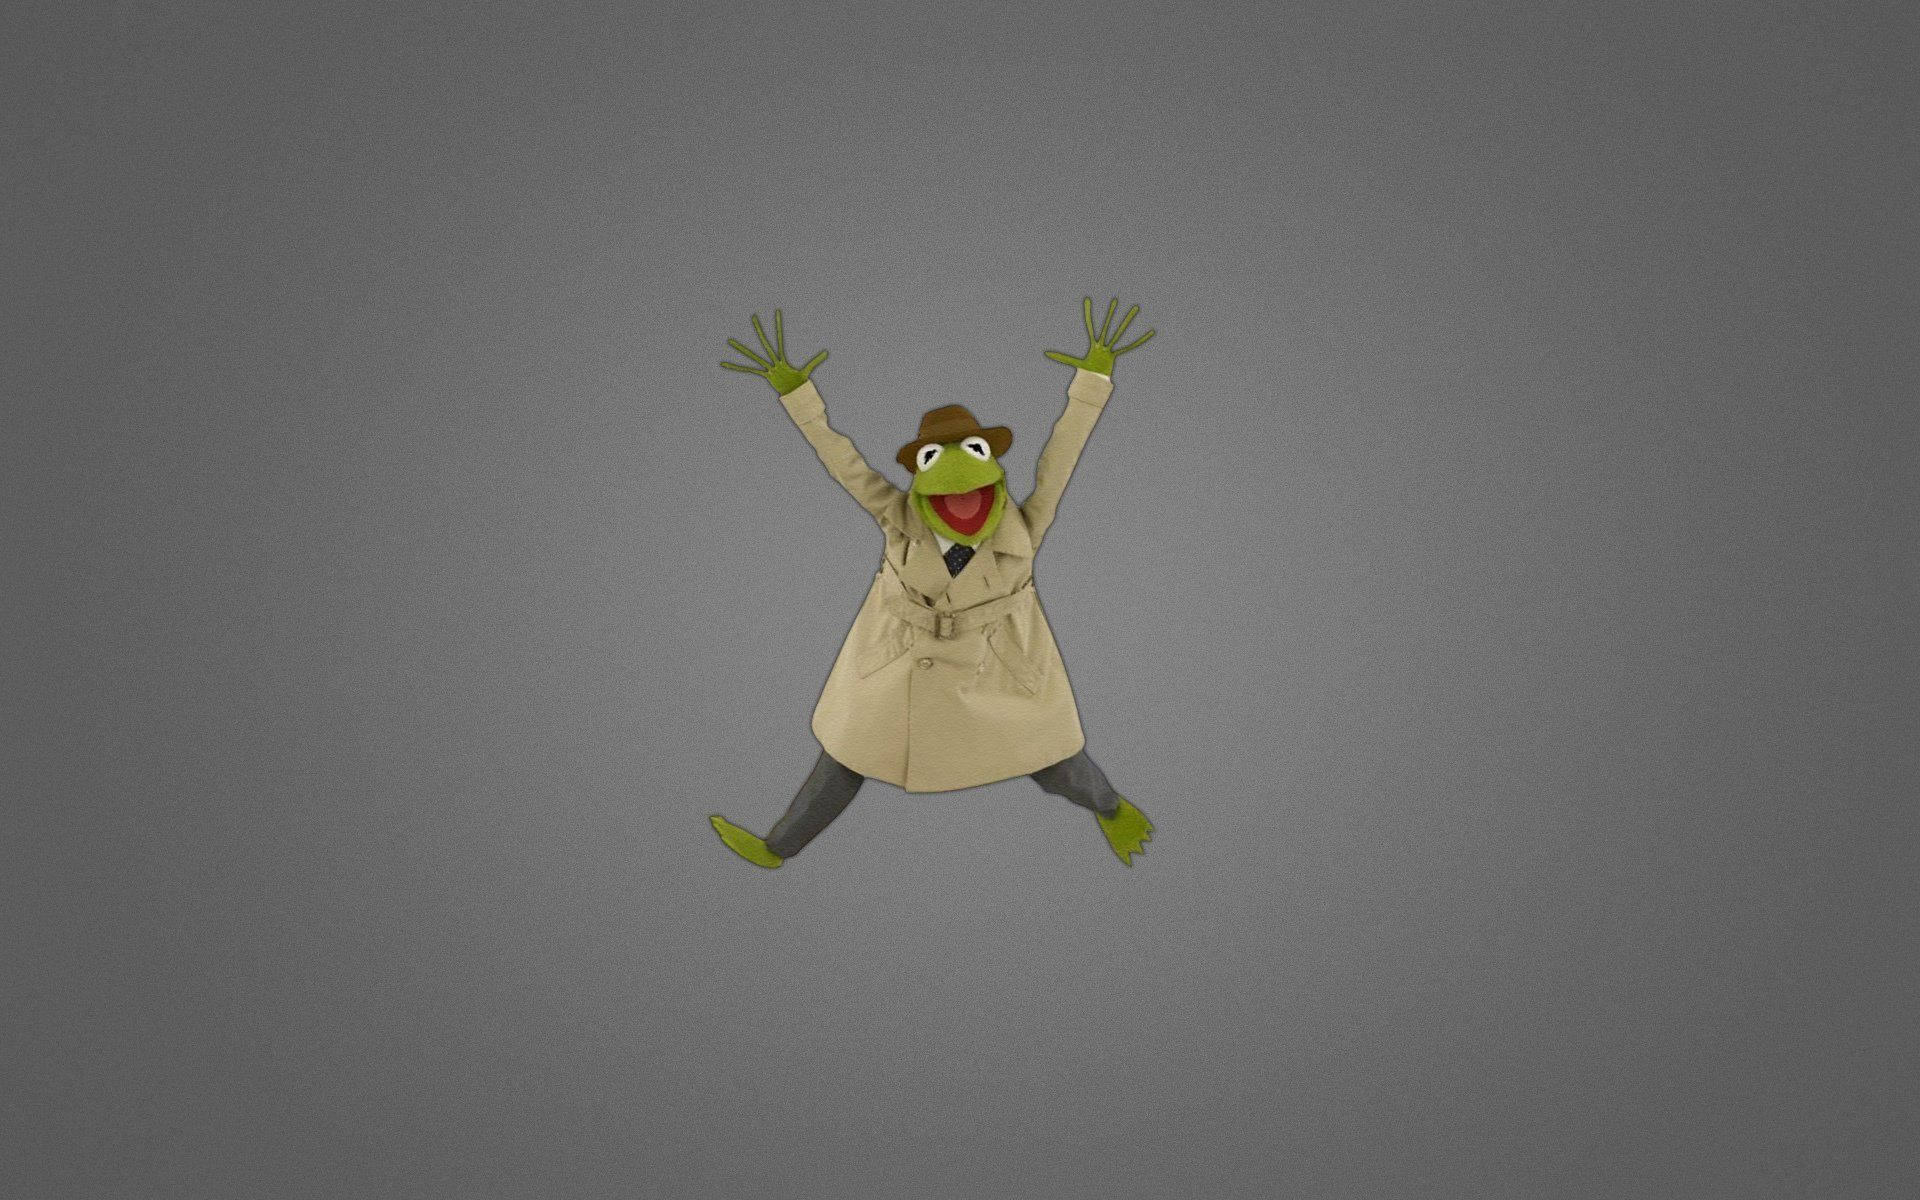 Wallpaper Kermit The Frog, Supreme, Outerwear, Brand, t Shirt